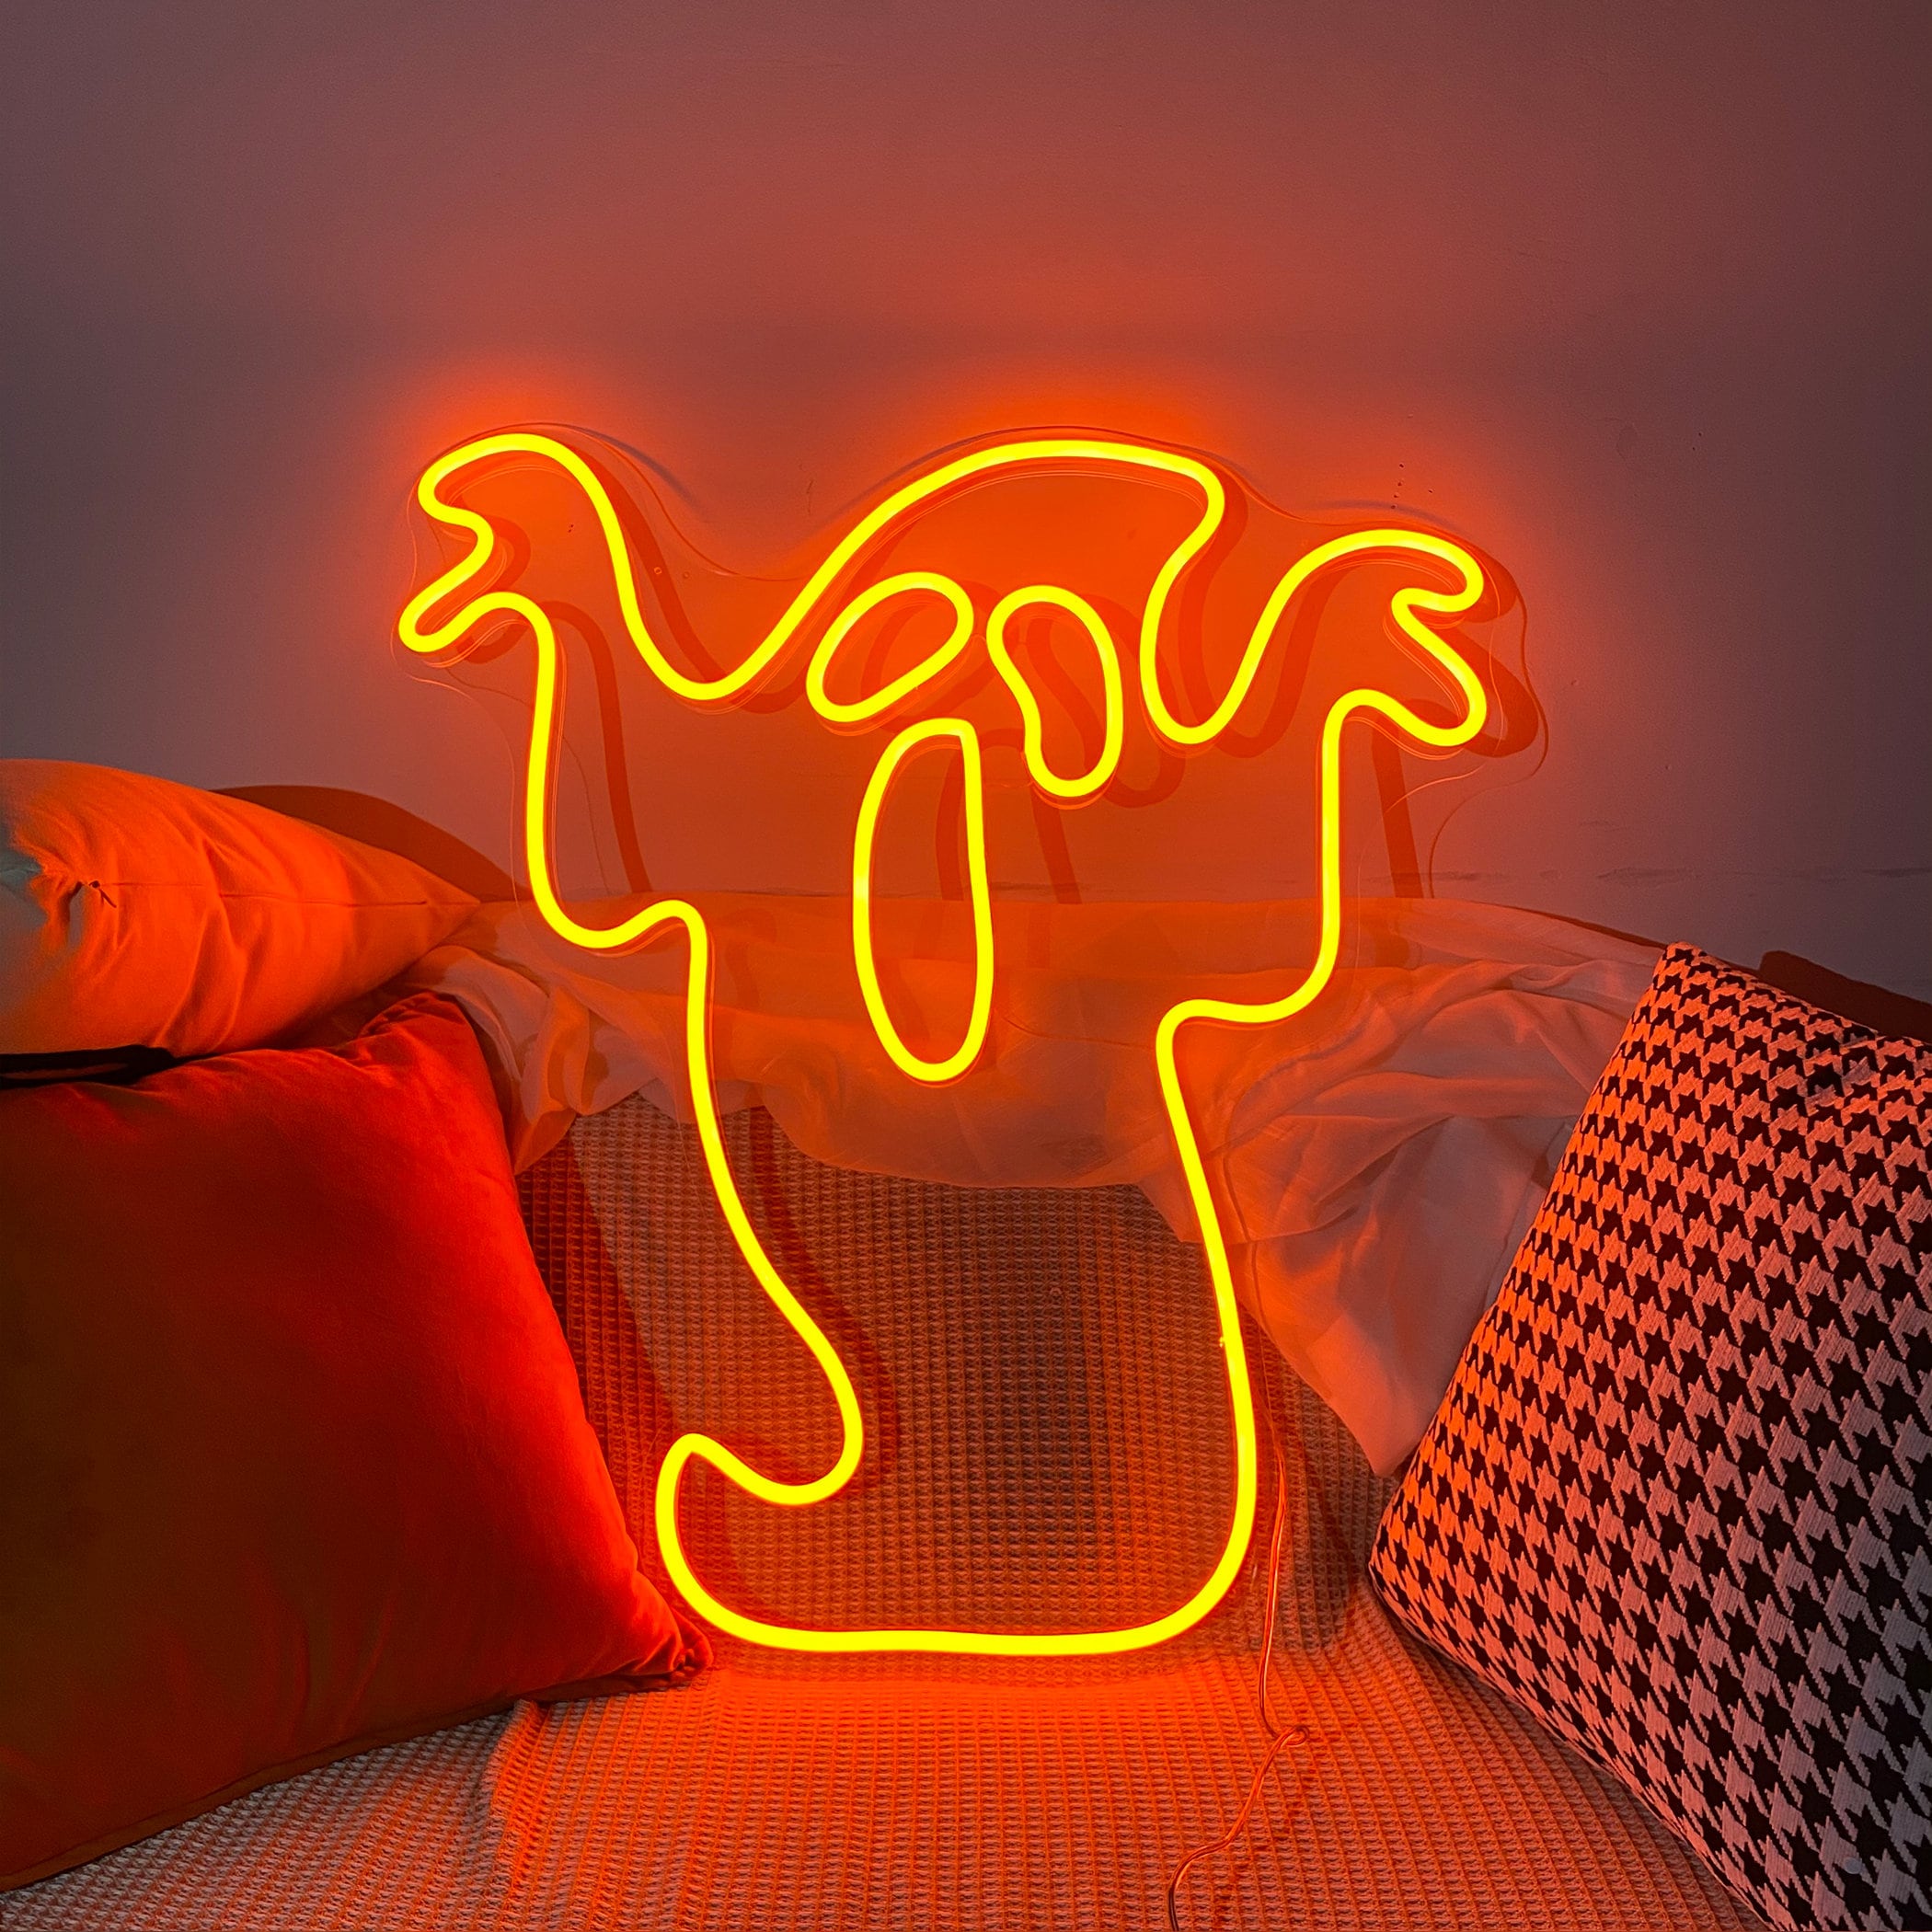 NEONIP-100% Handmade Ghost Neon Signs,Halloween Neon Light